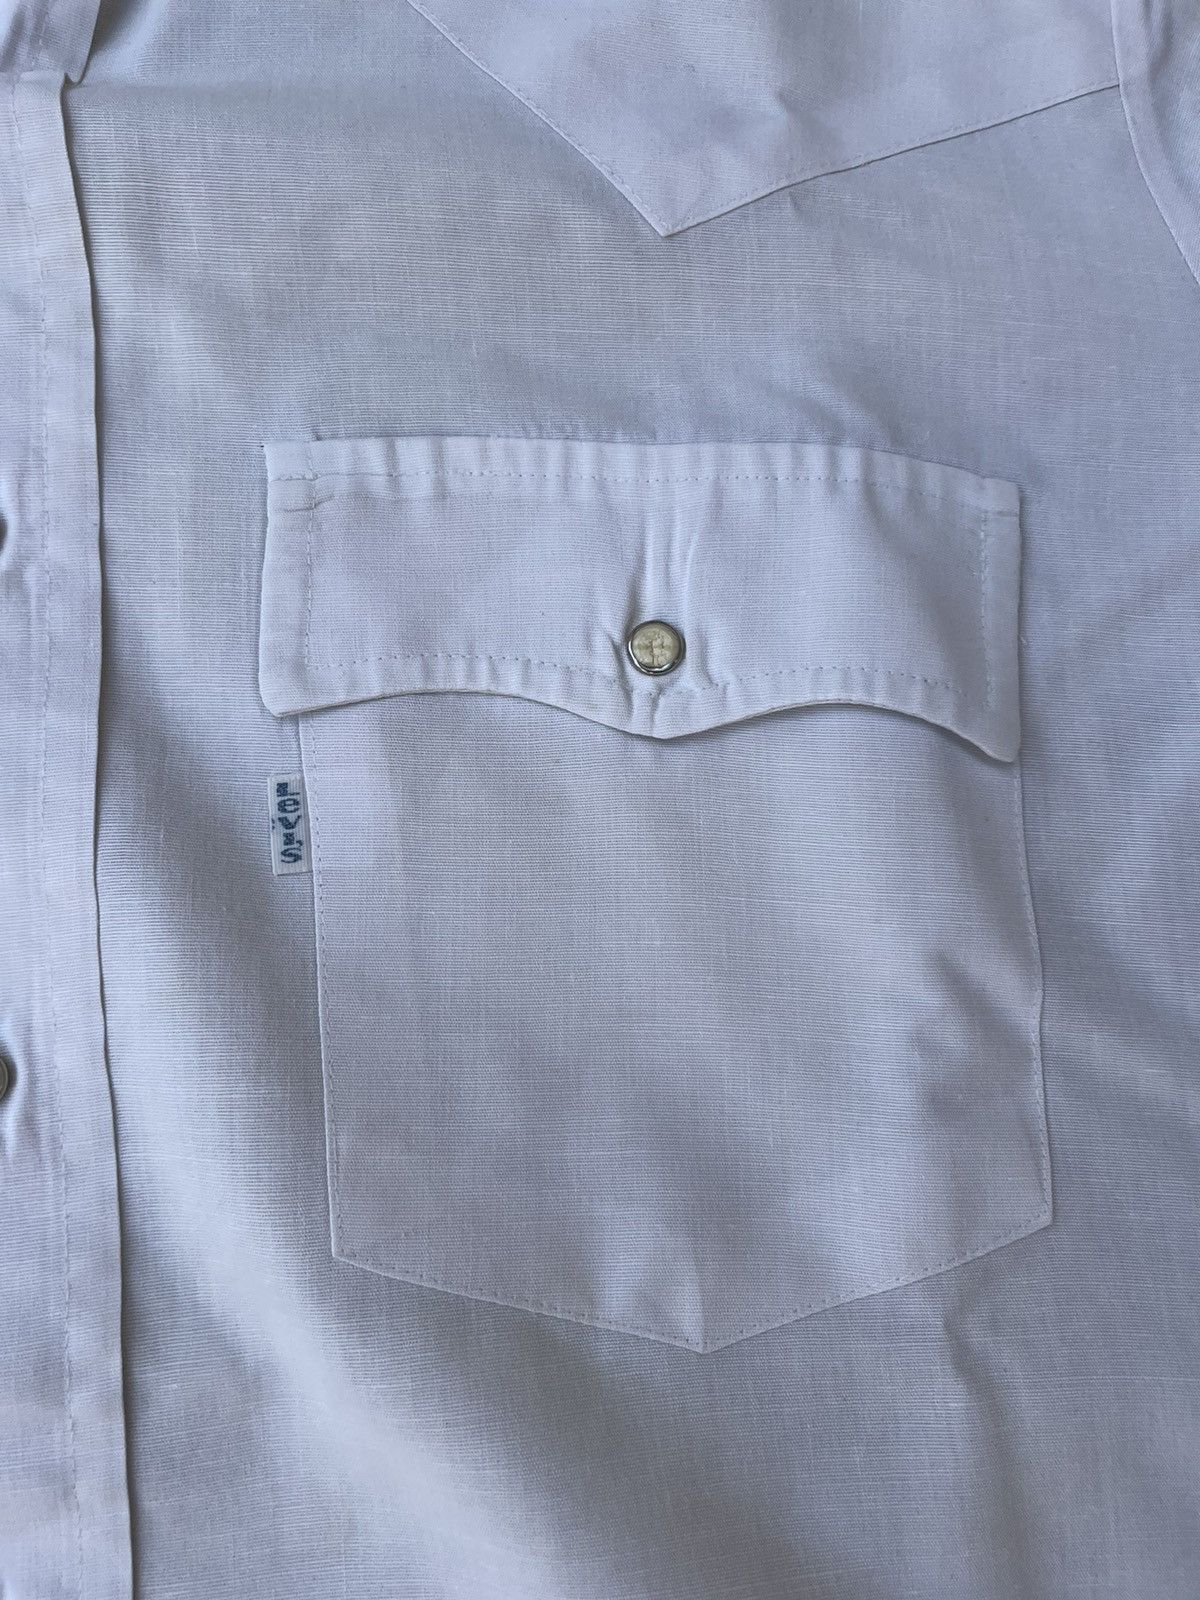 Vintage Vtg 80s Levis White Tab Western Pearl Snap Buttoned Shirt XL Size US XL / EU 56 / 4 - 5 Thumbnail